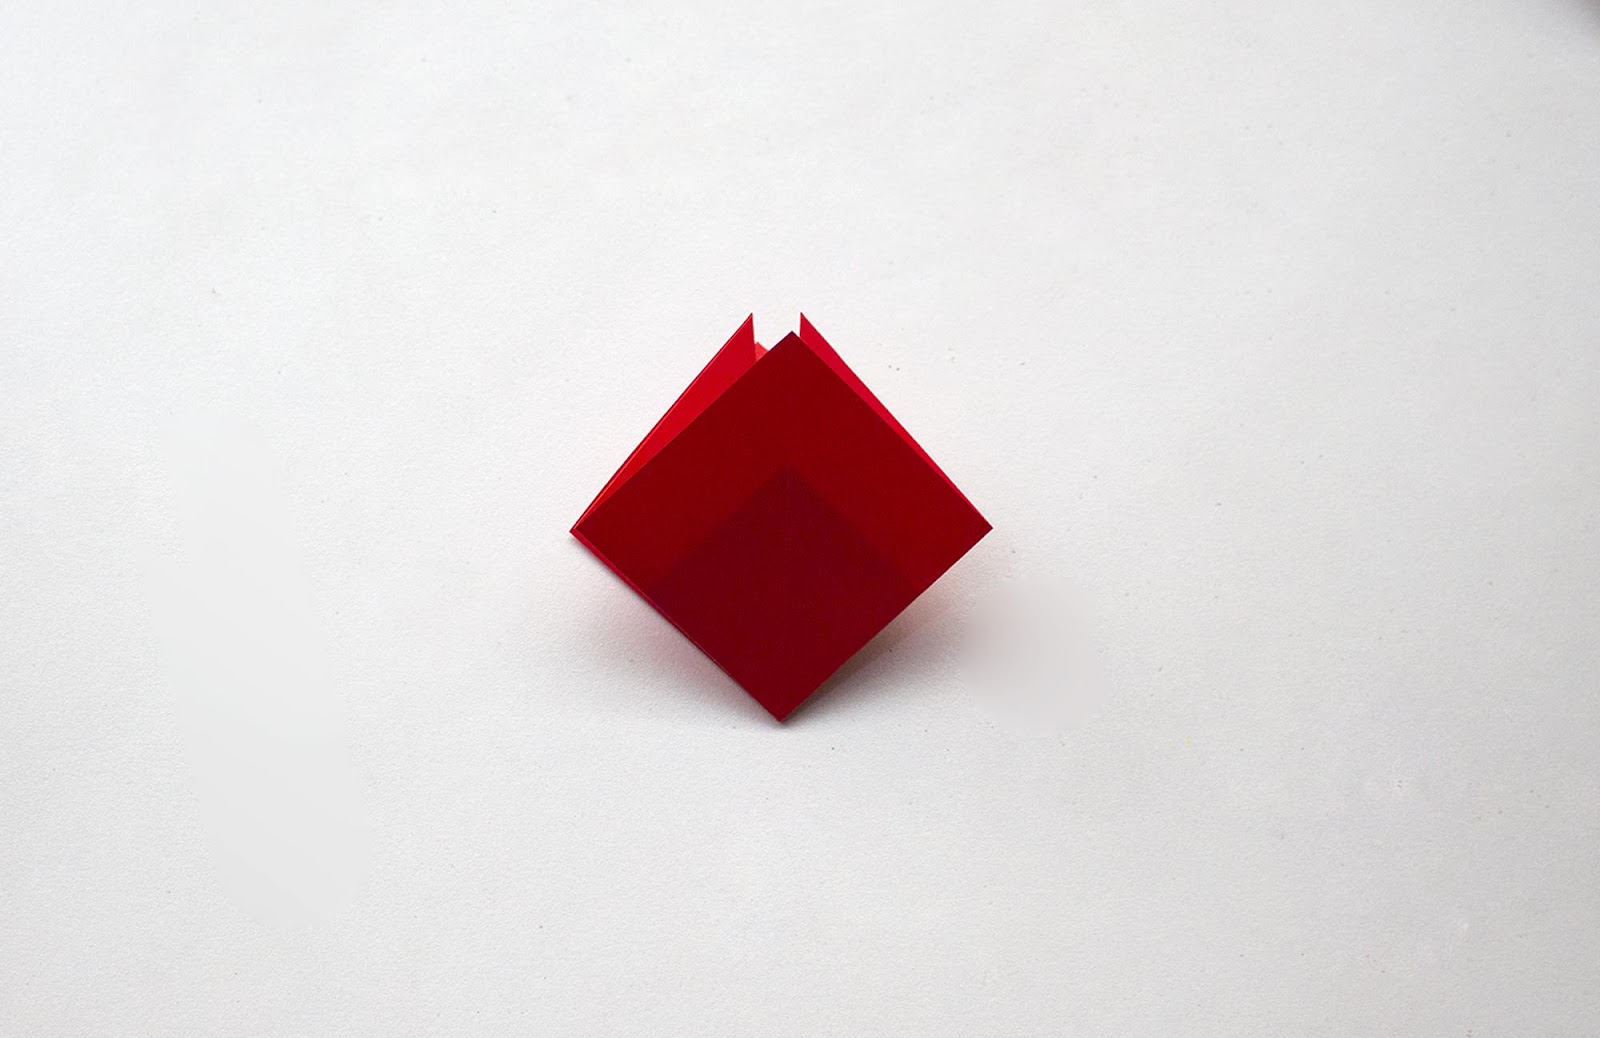 Origami poppy flower step 8: red diamond with open folds pointing upward